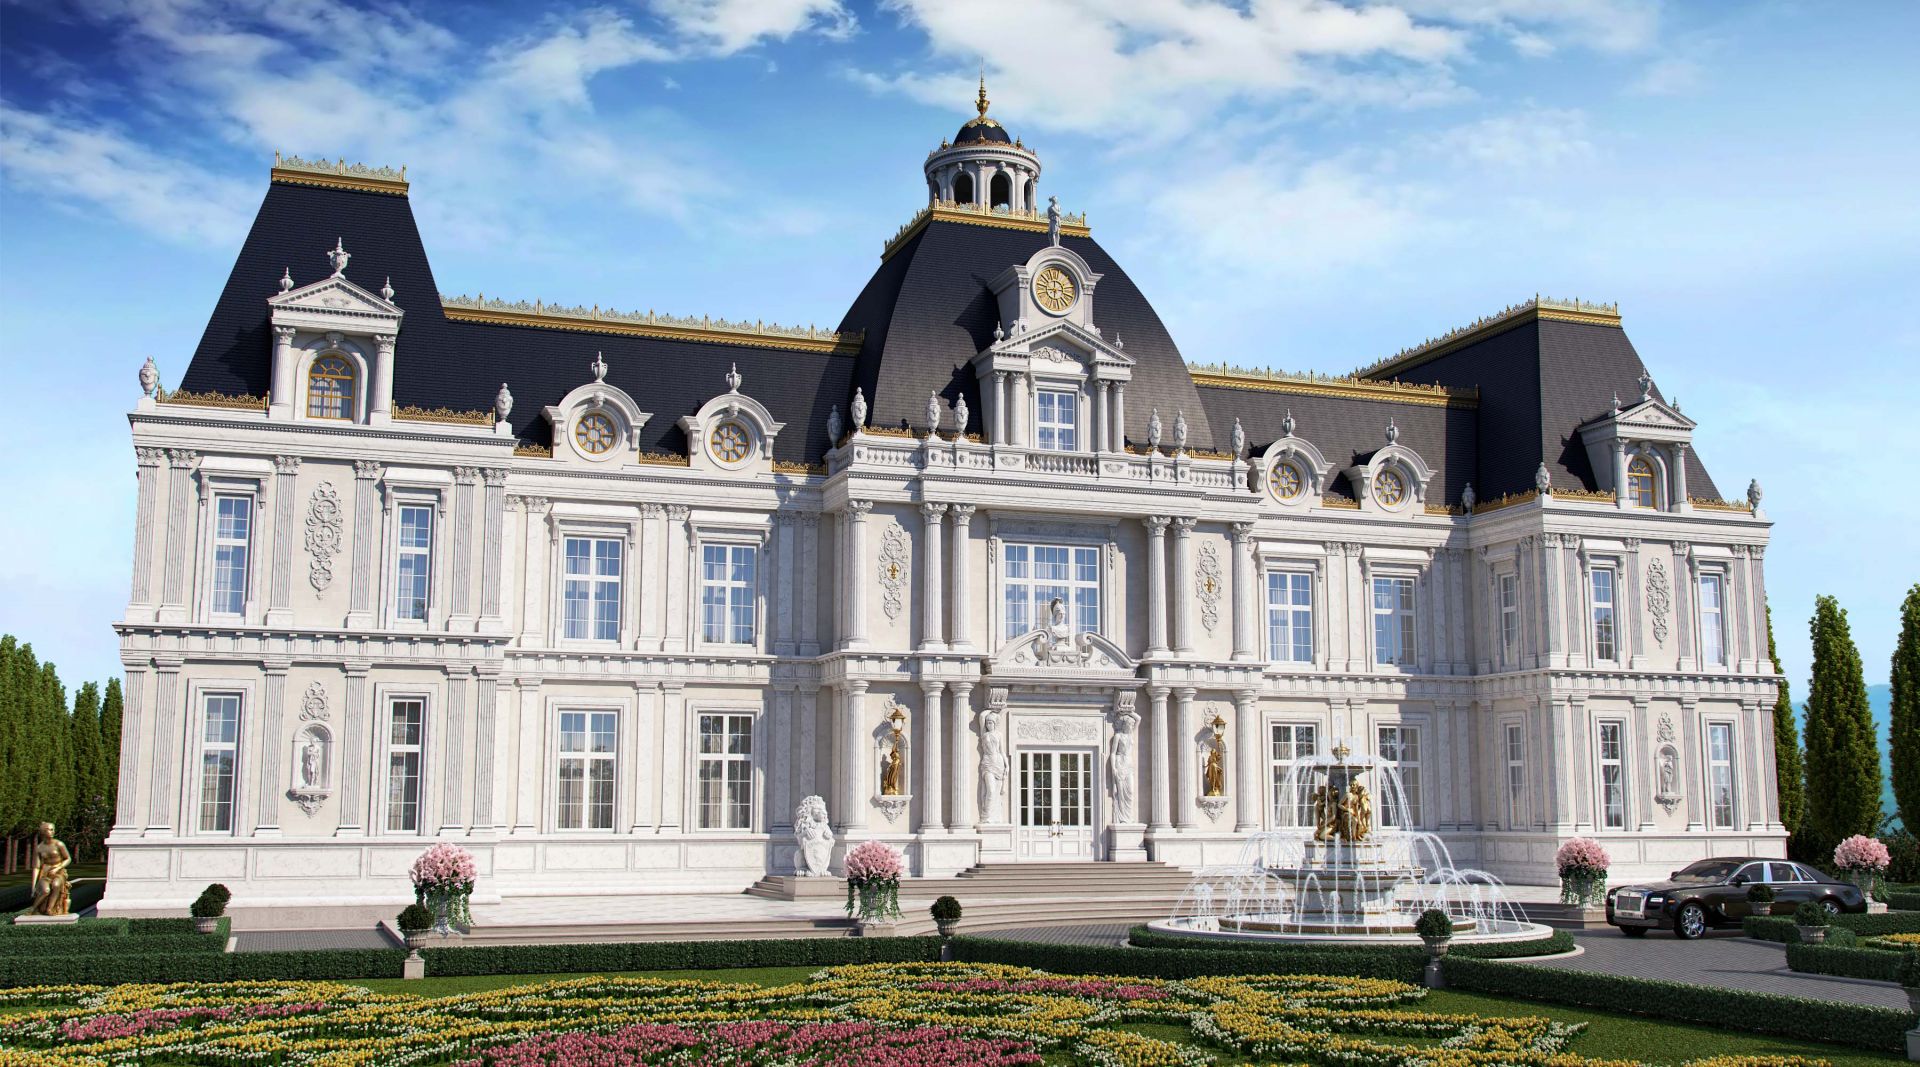 Palace windows MIRT for a luxury villa